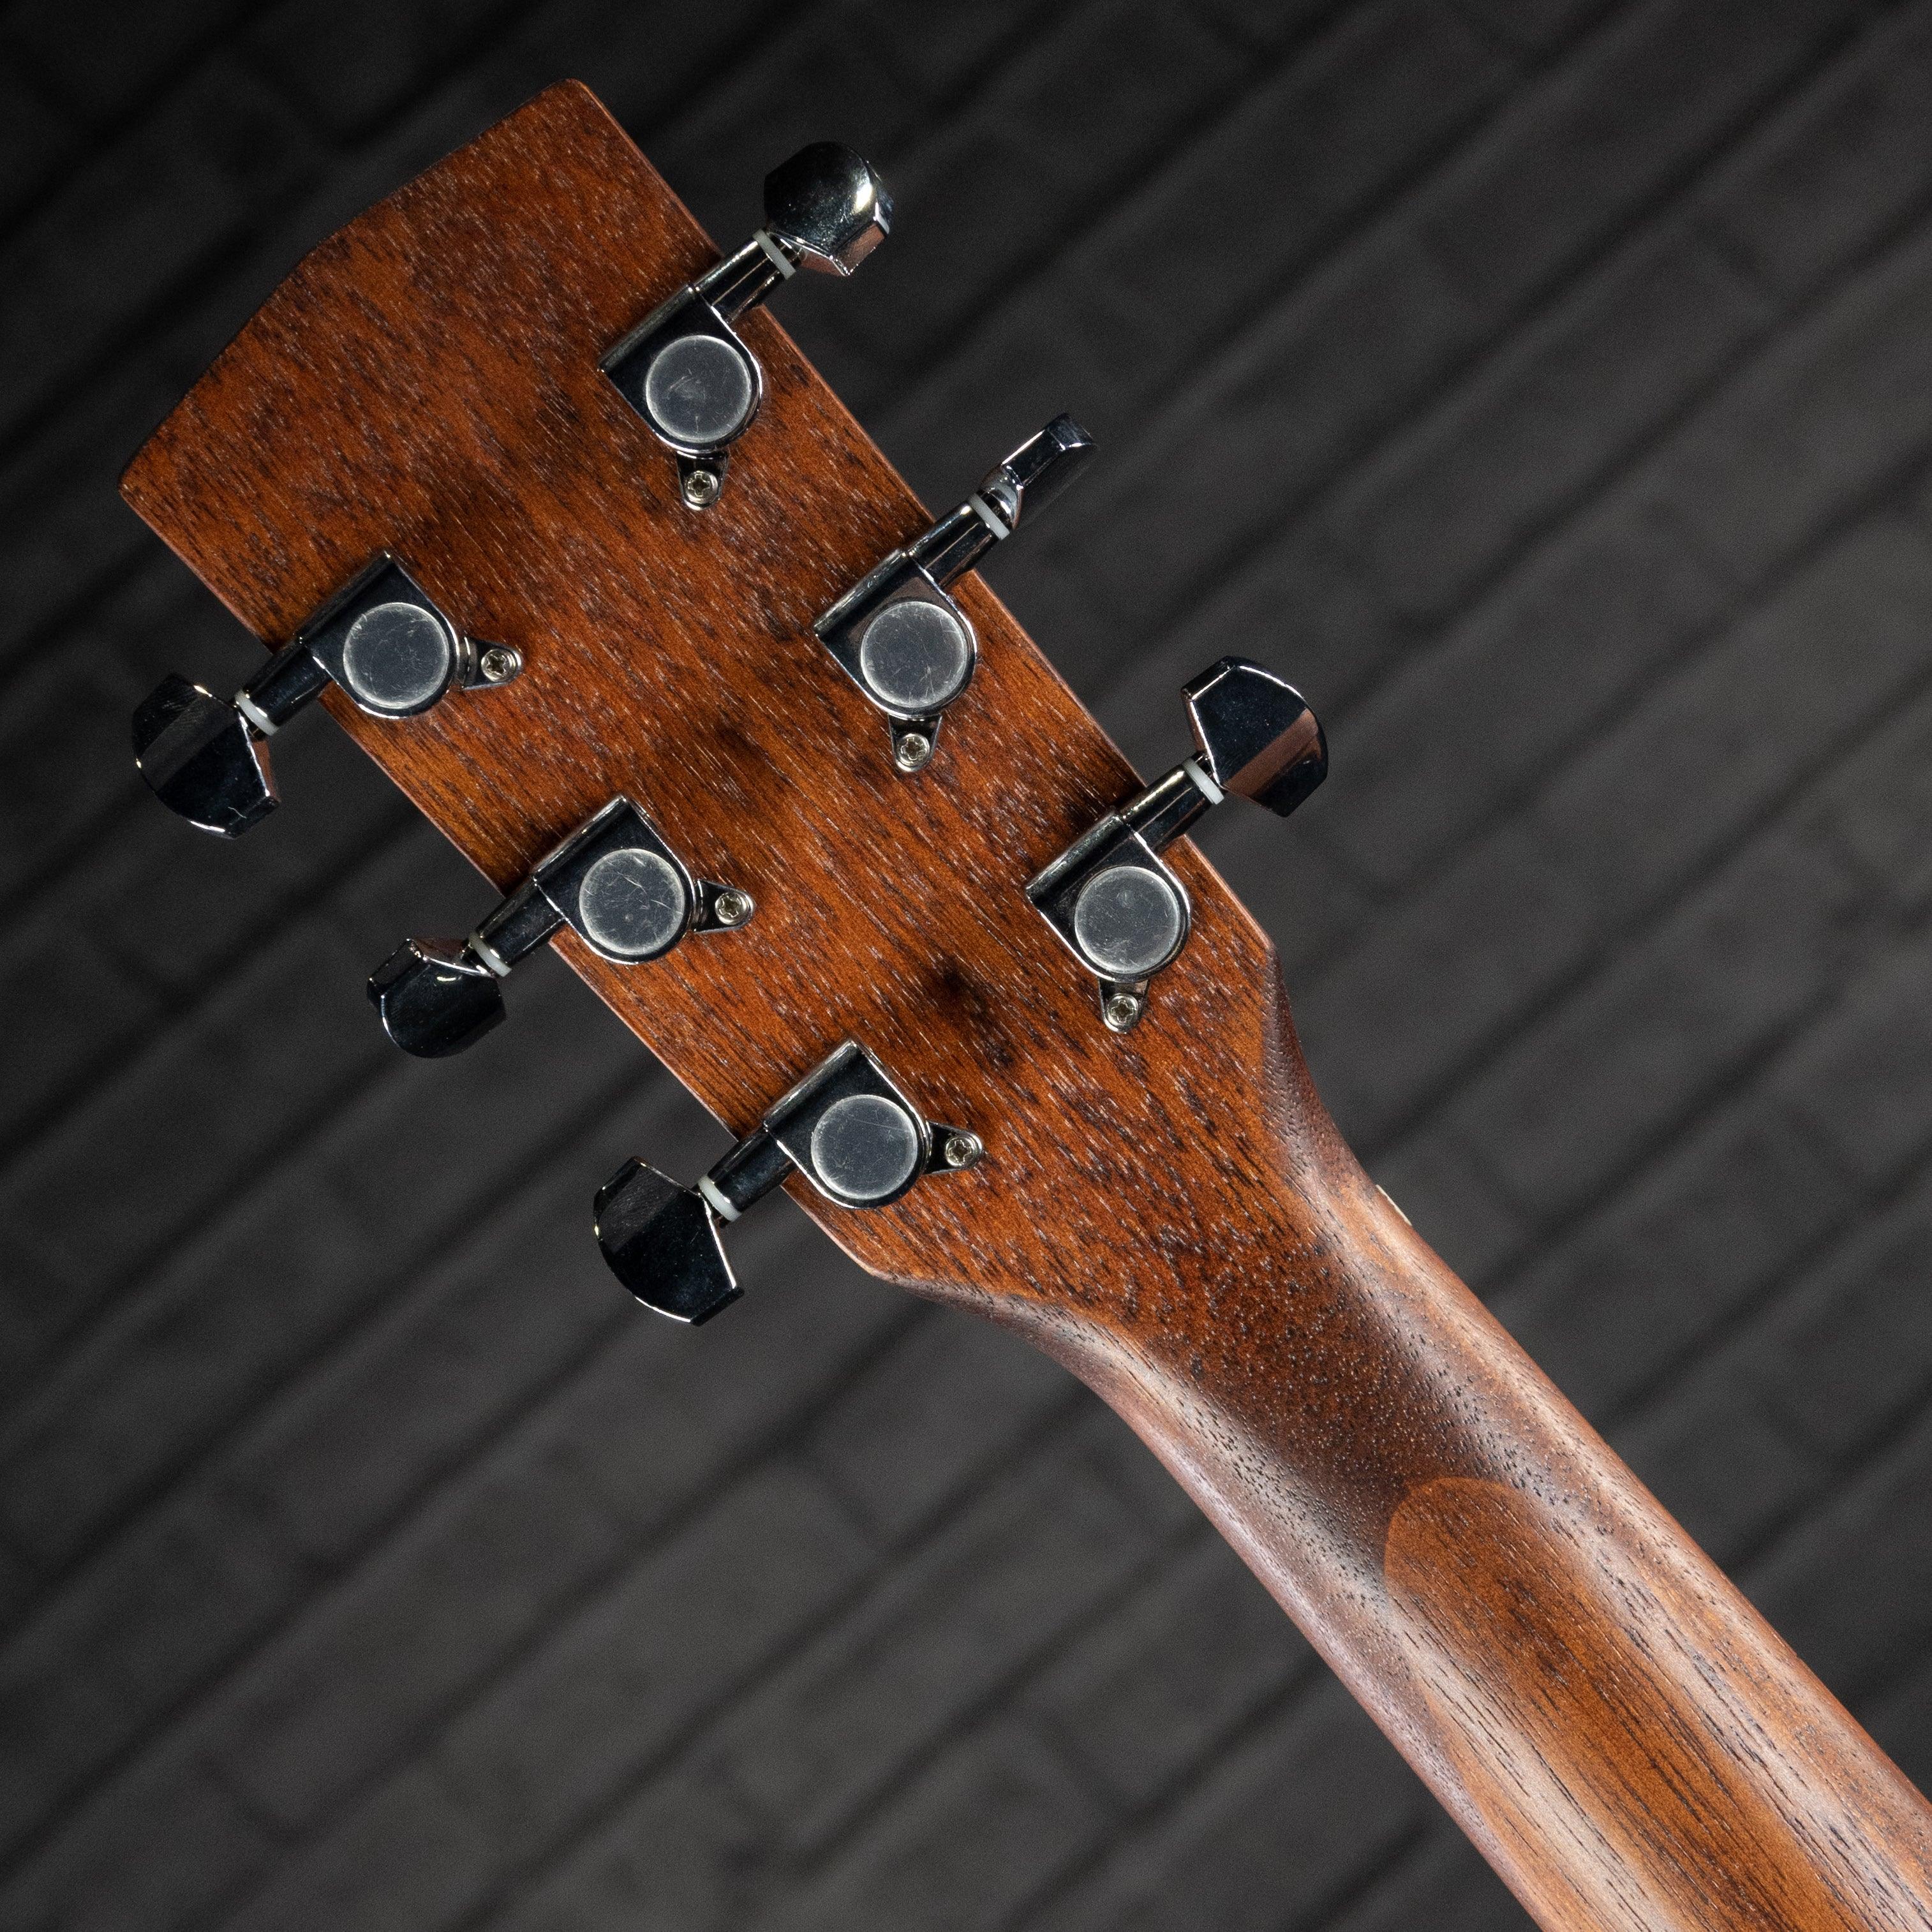 Cort AF510OP Standard Series Acoustic Concert Guitar (Open Pore Natural) - Impulse Music Co.